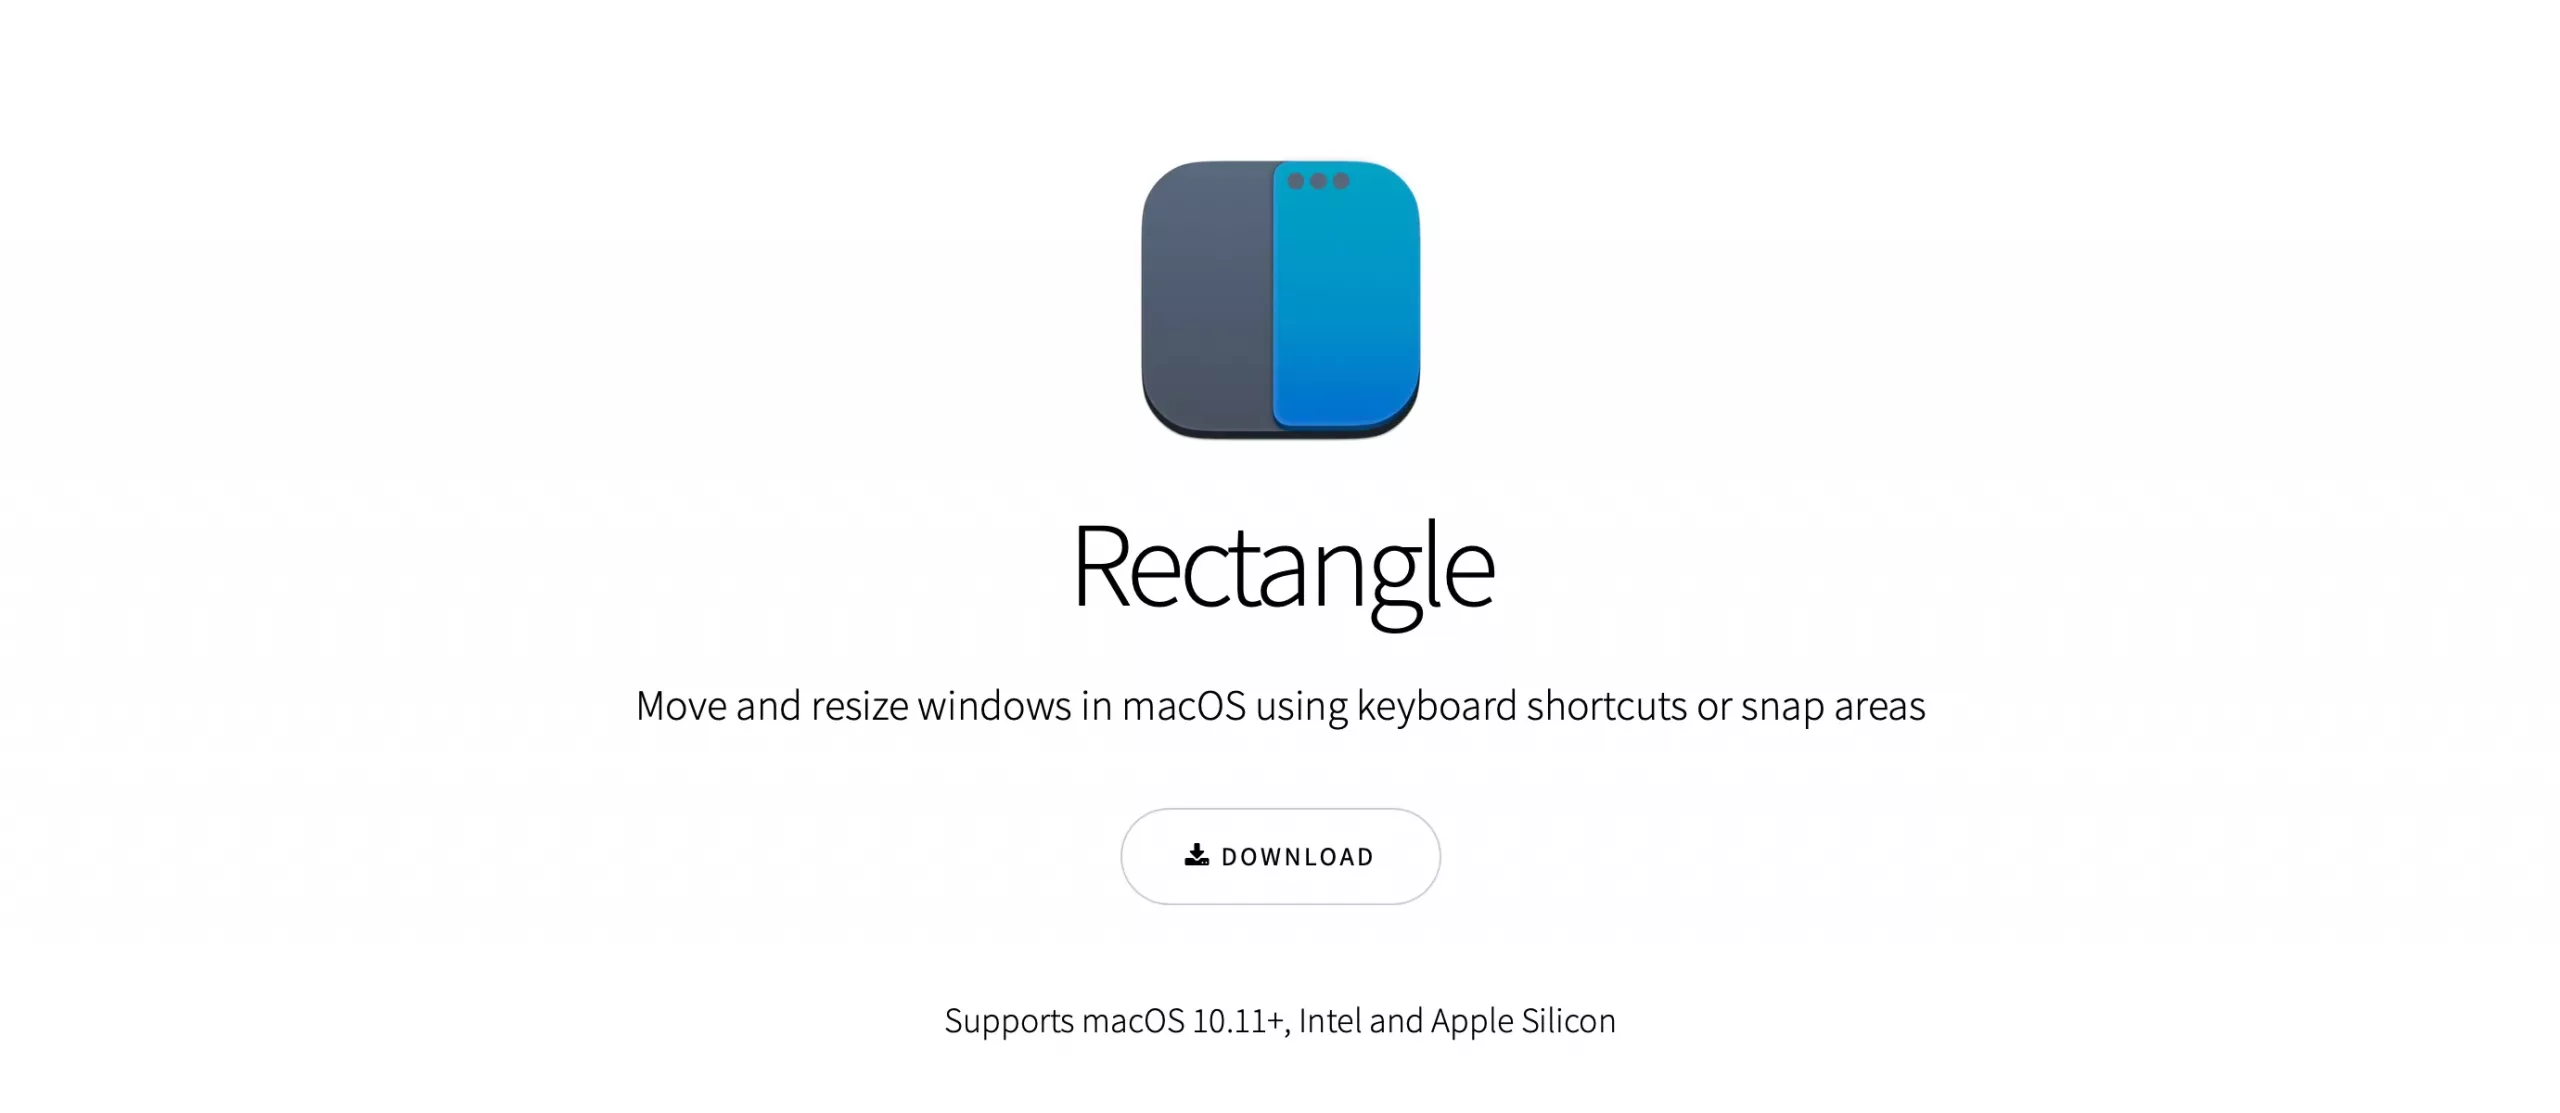 Rectangle App (rectangleapp.com)